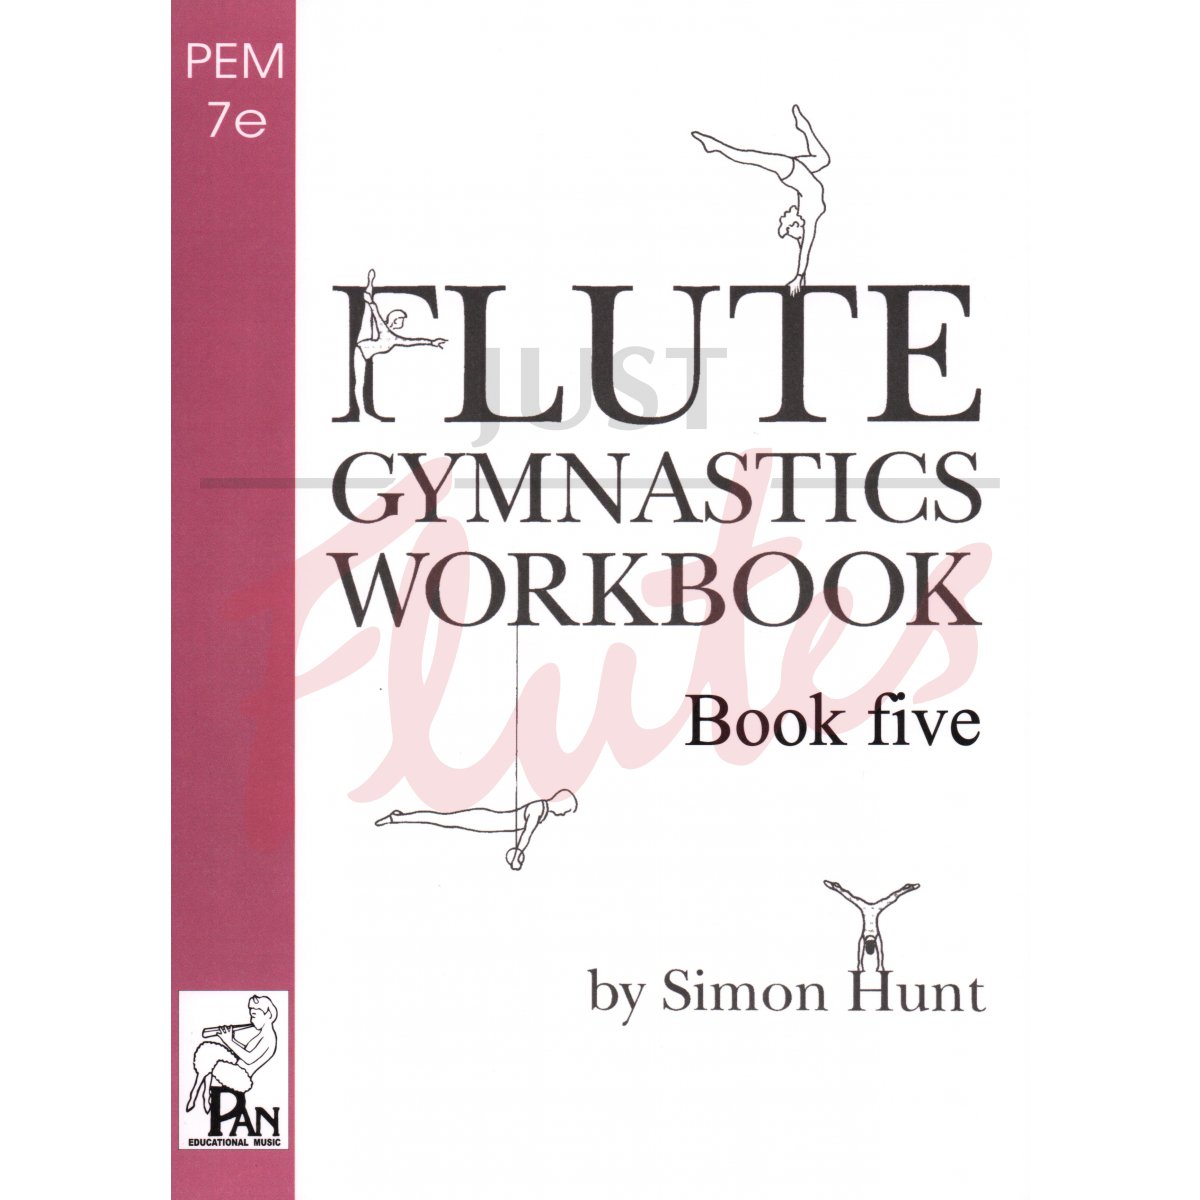 Flute Gymnastics Workbook